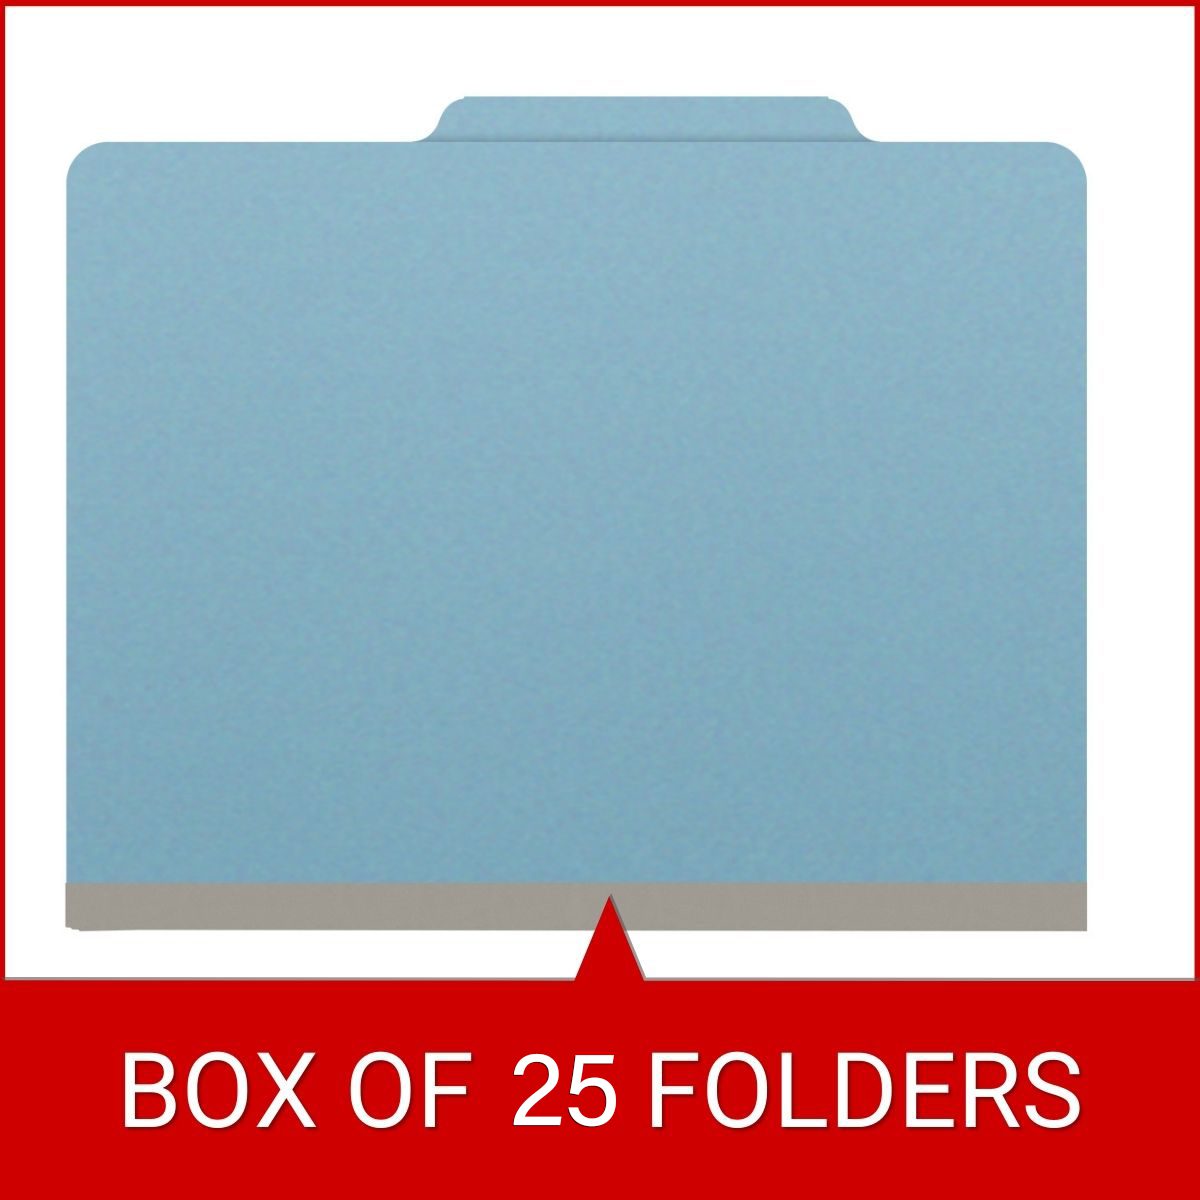 ! 10 Folders Per Box Bottom boarder